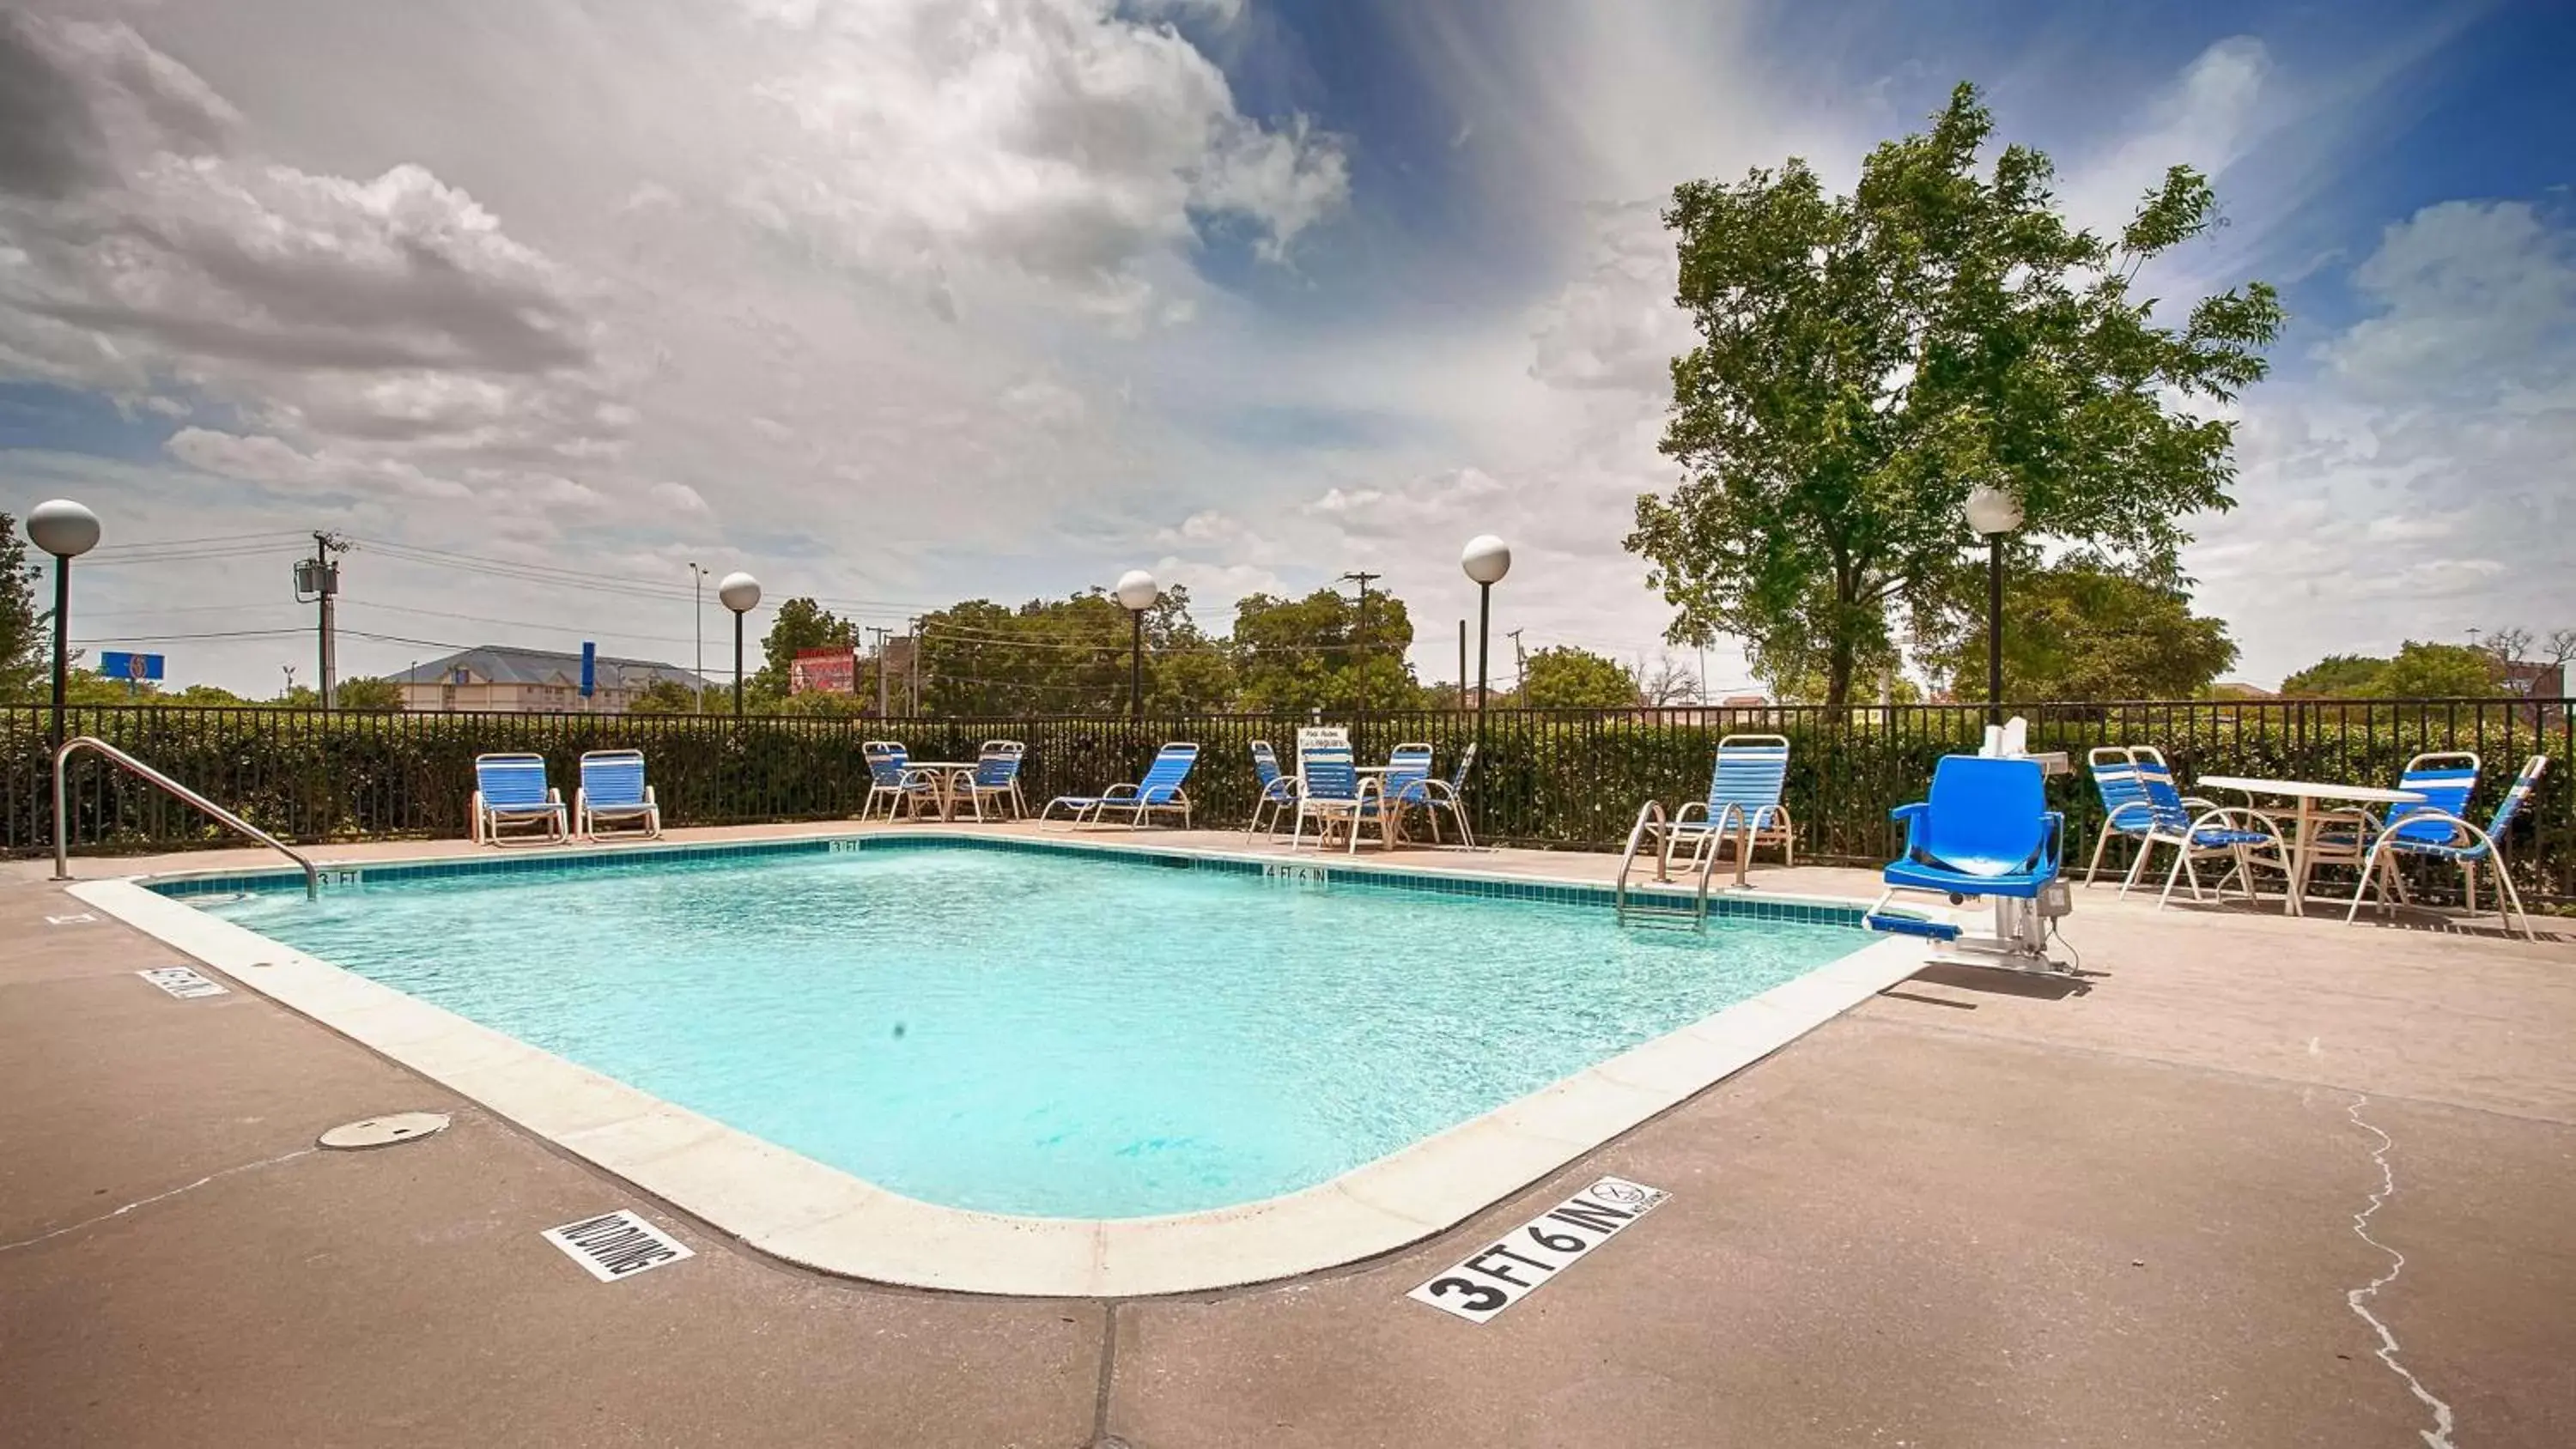 On site, Swimming Pool in Best Western Northwest Inn